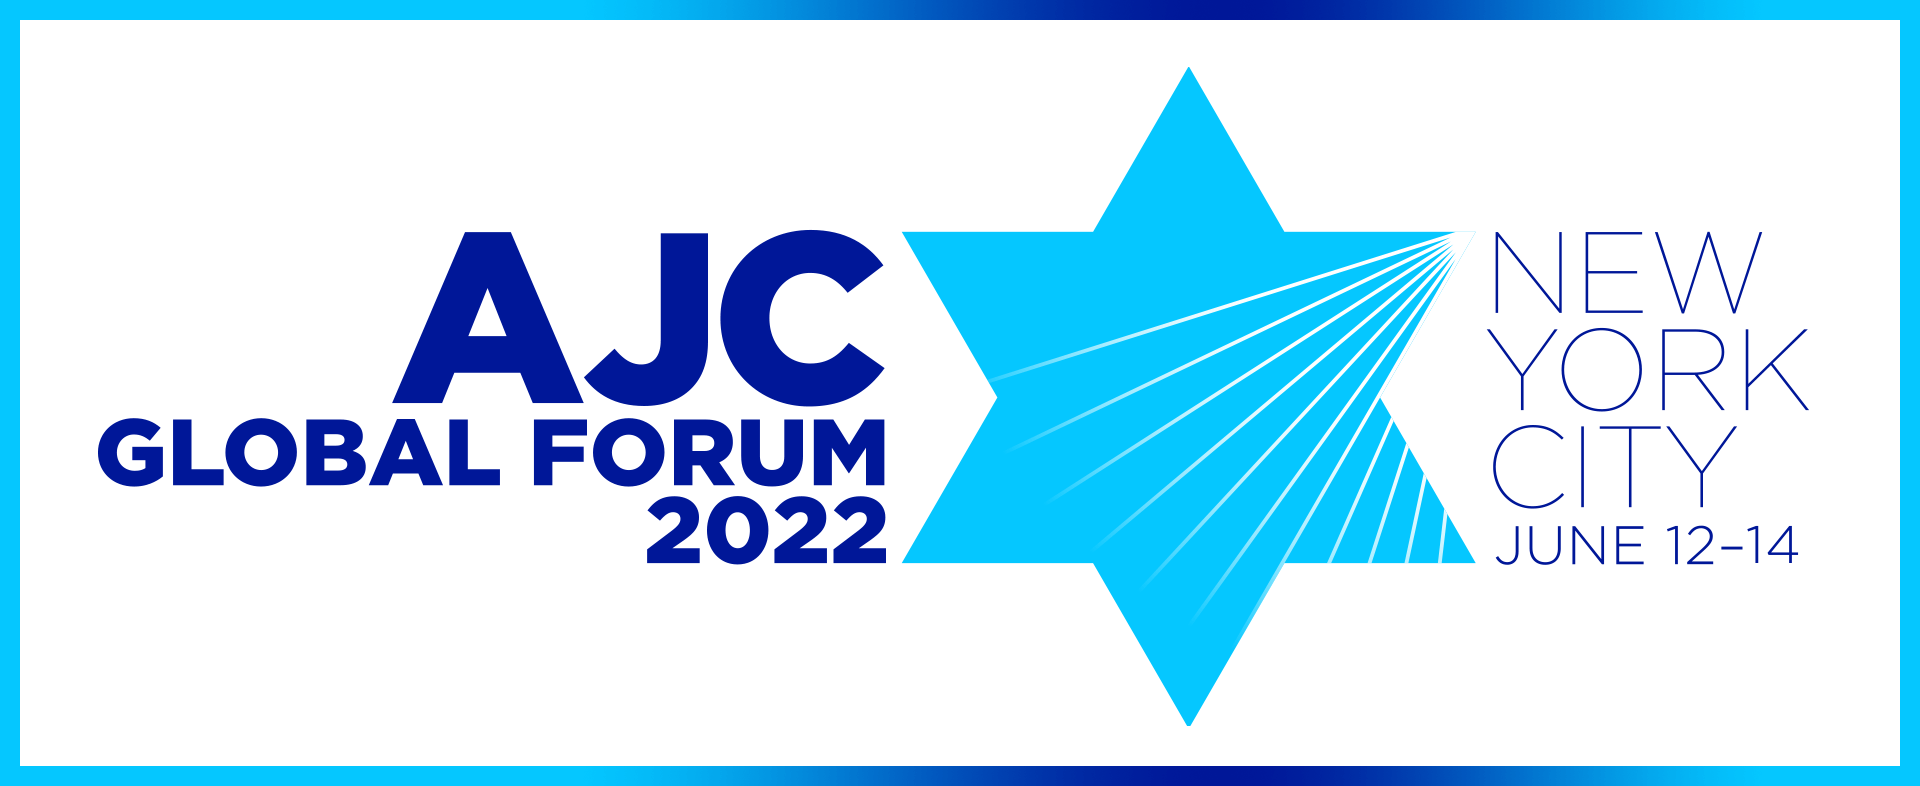 AJC Global Forum 2022 - New York City - June 12 - 14